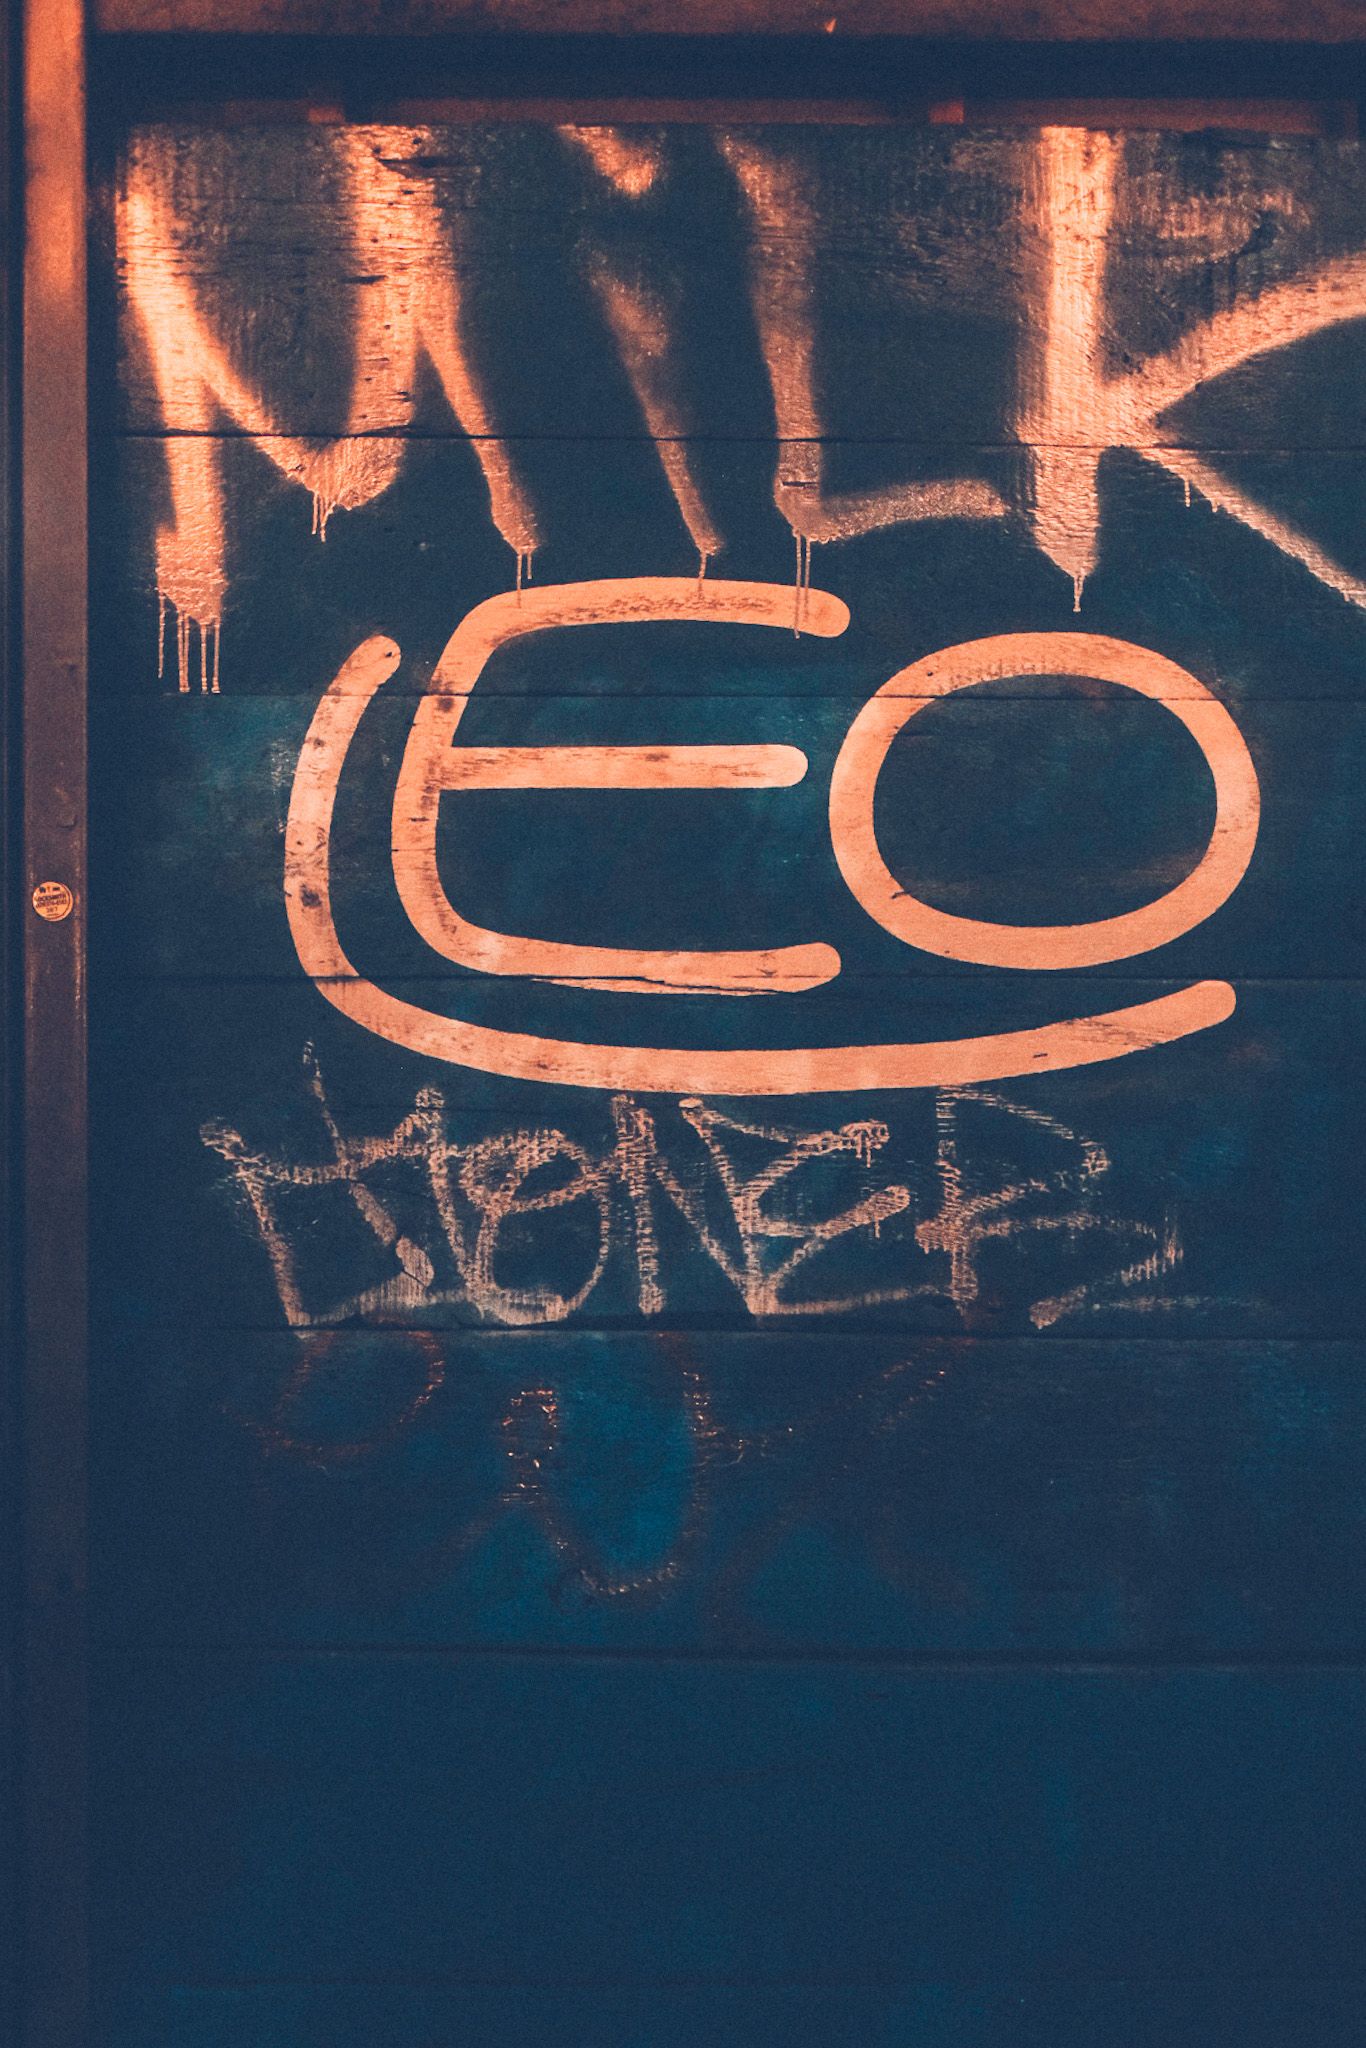 Graffiti saying “Milk” and “Leo” runs across a dark green garage door.